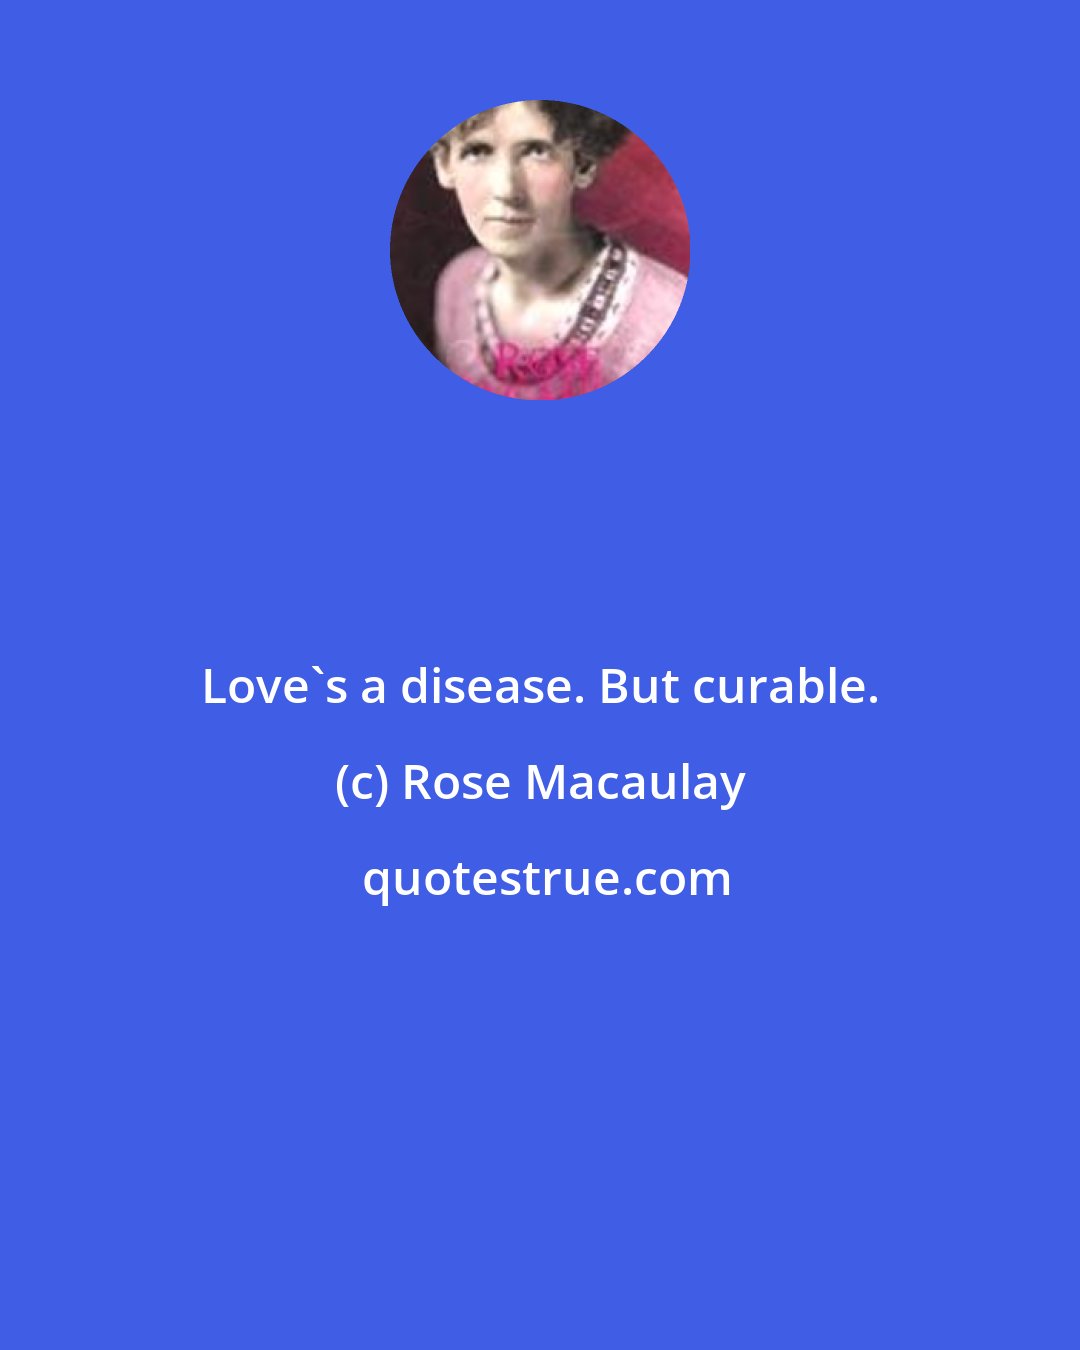 Rose Macaulay: Love's a disease. But curable.